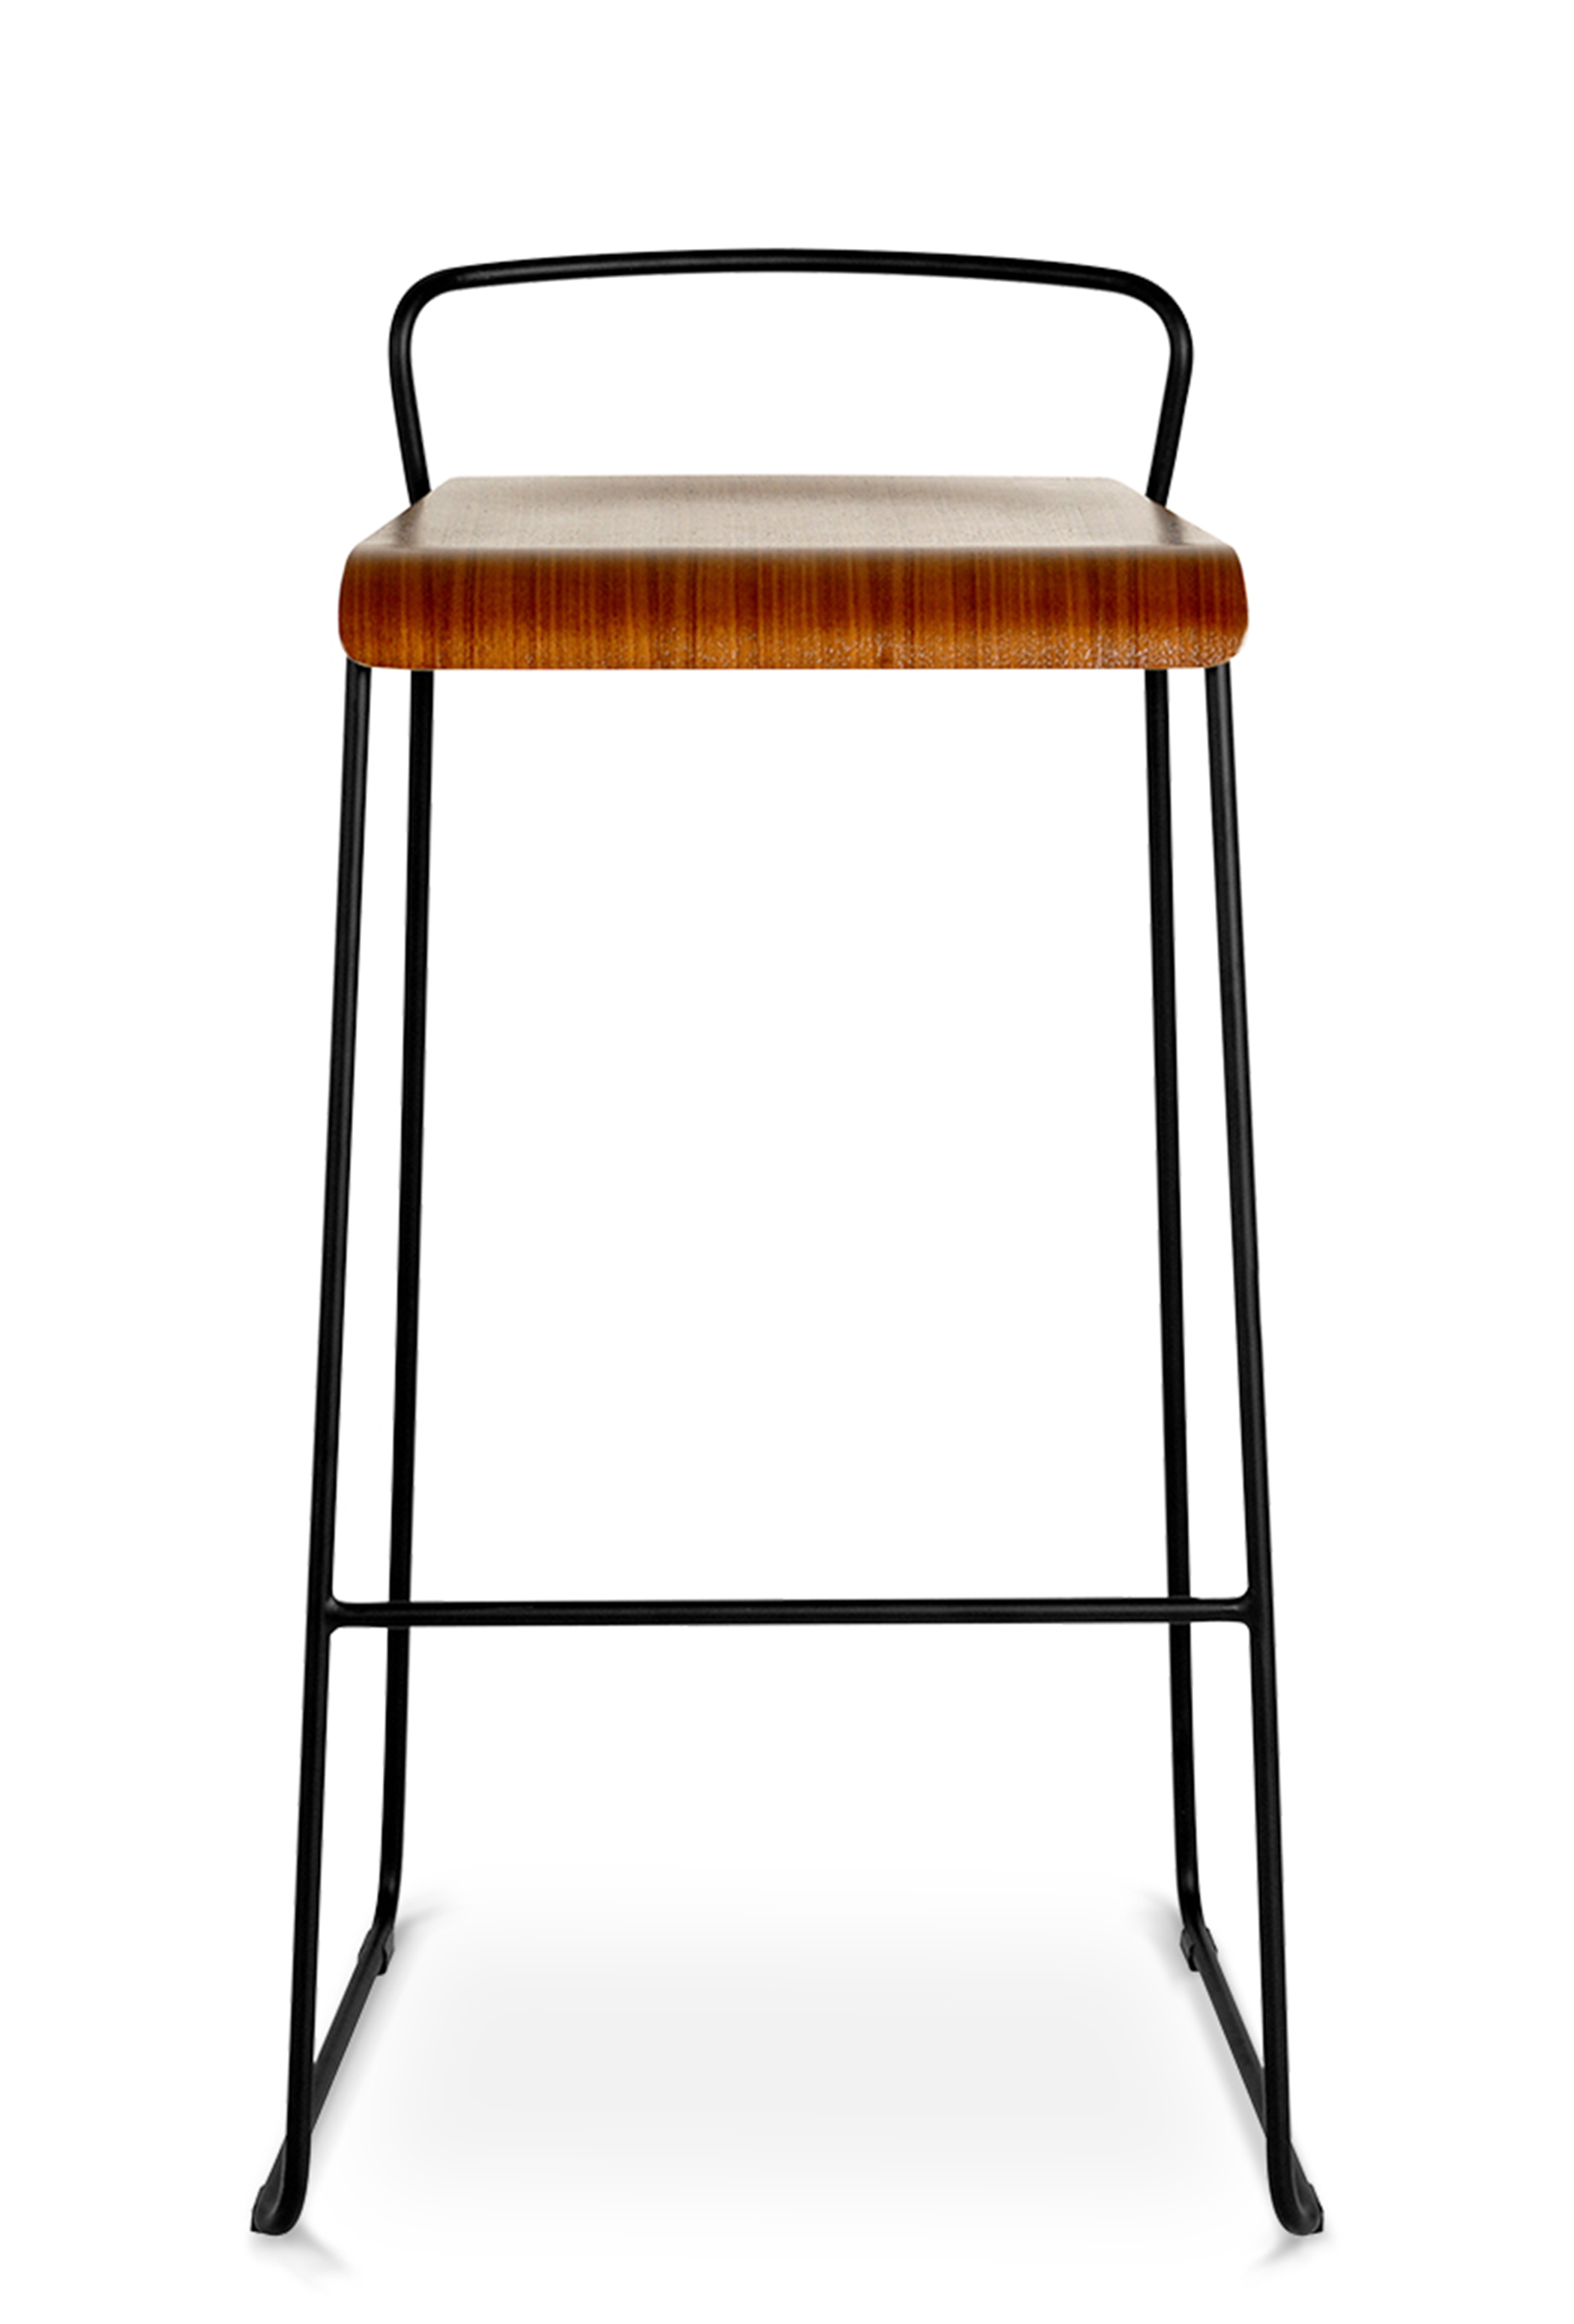 WS - Transit high stool - Walnut (Front)